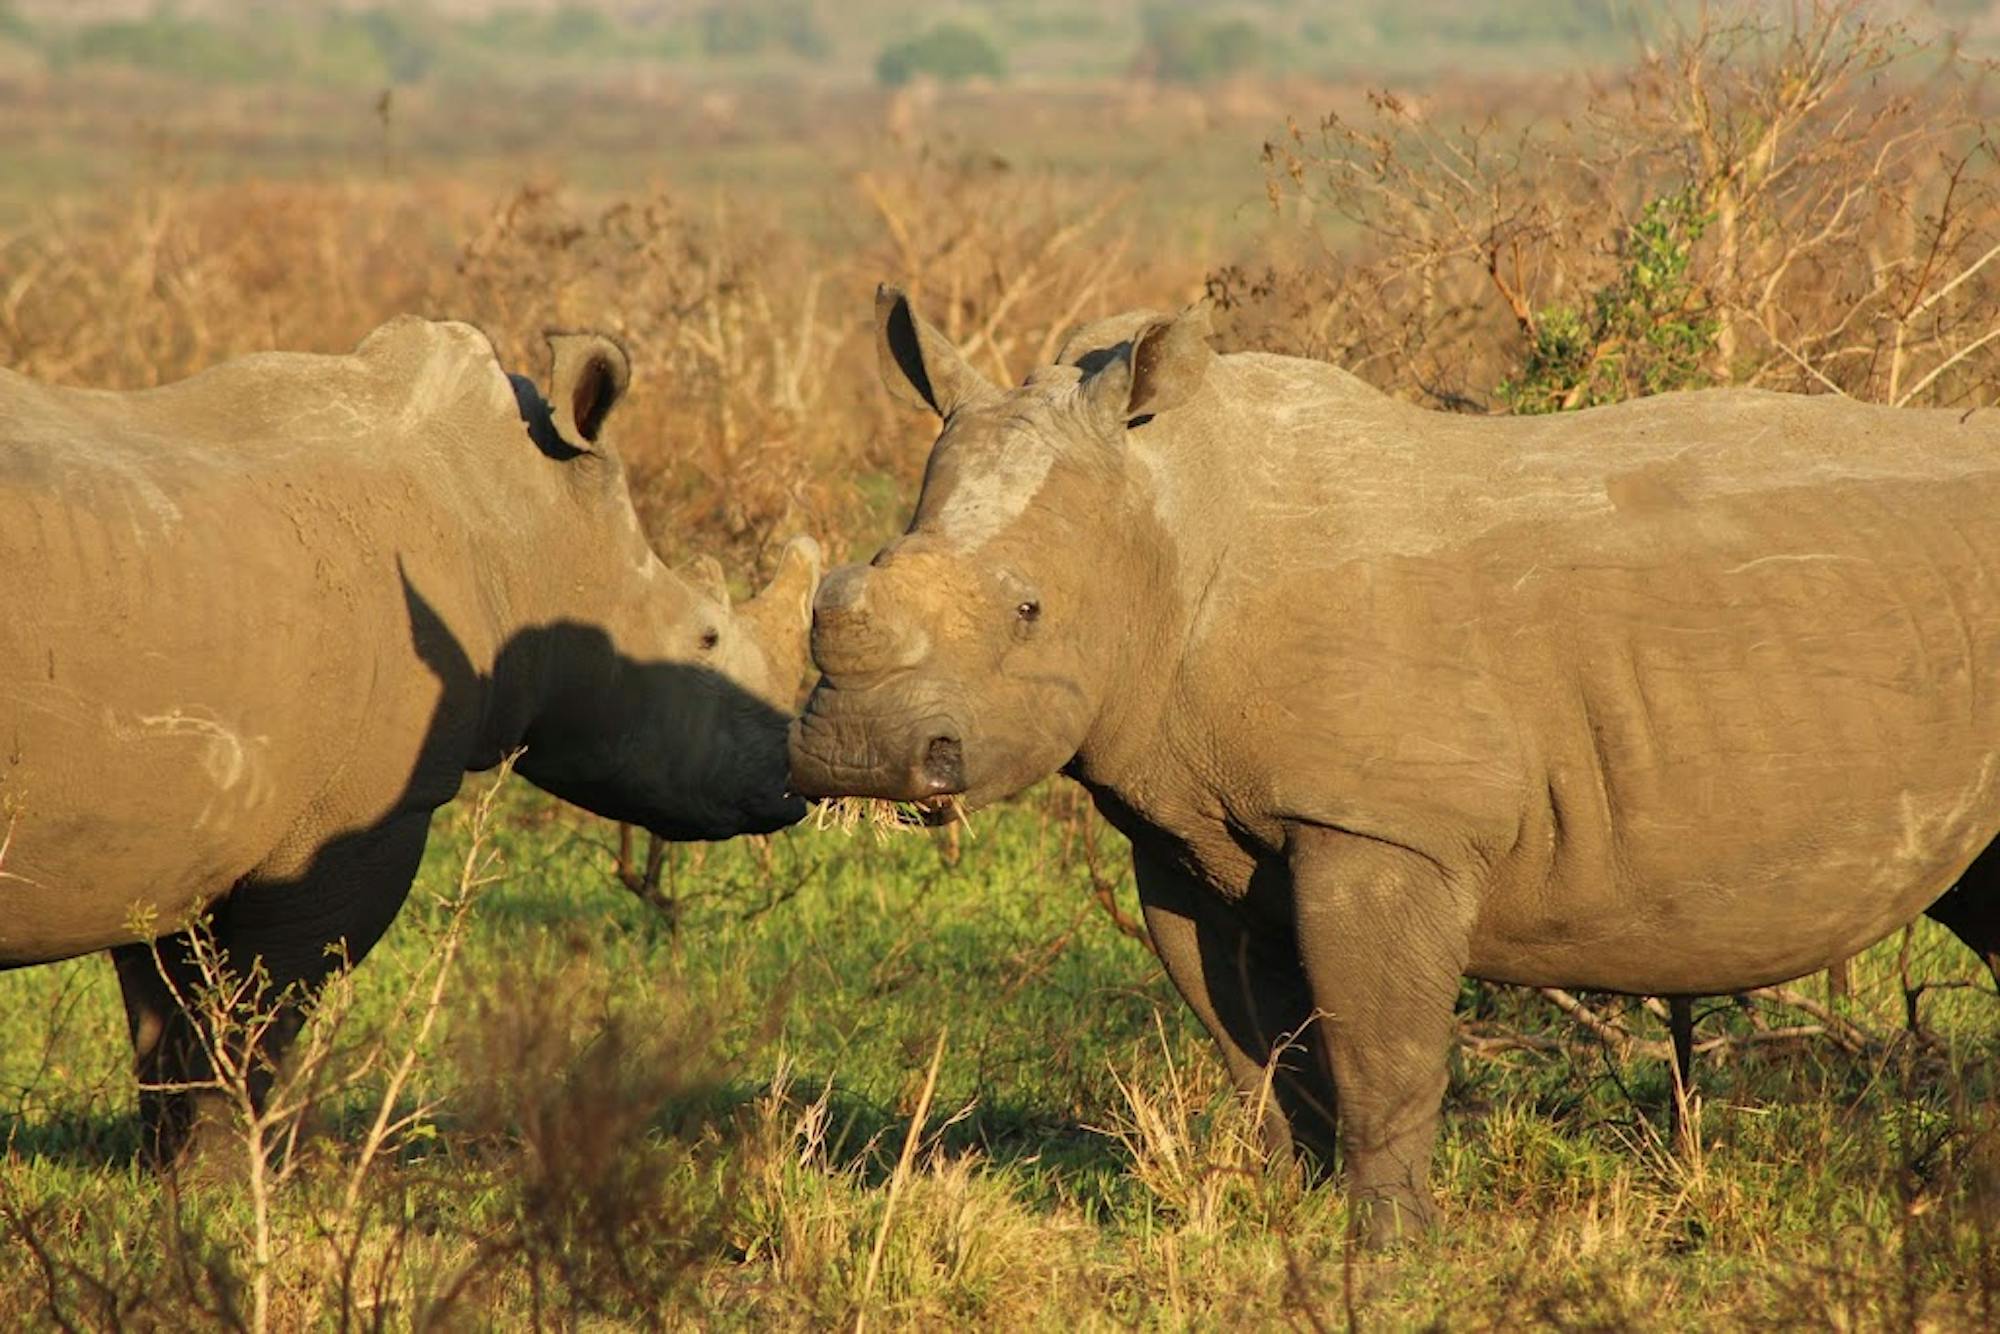 Nathalie Neumann: Two rhinos in the bush